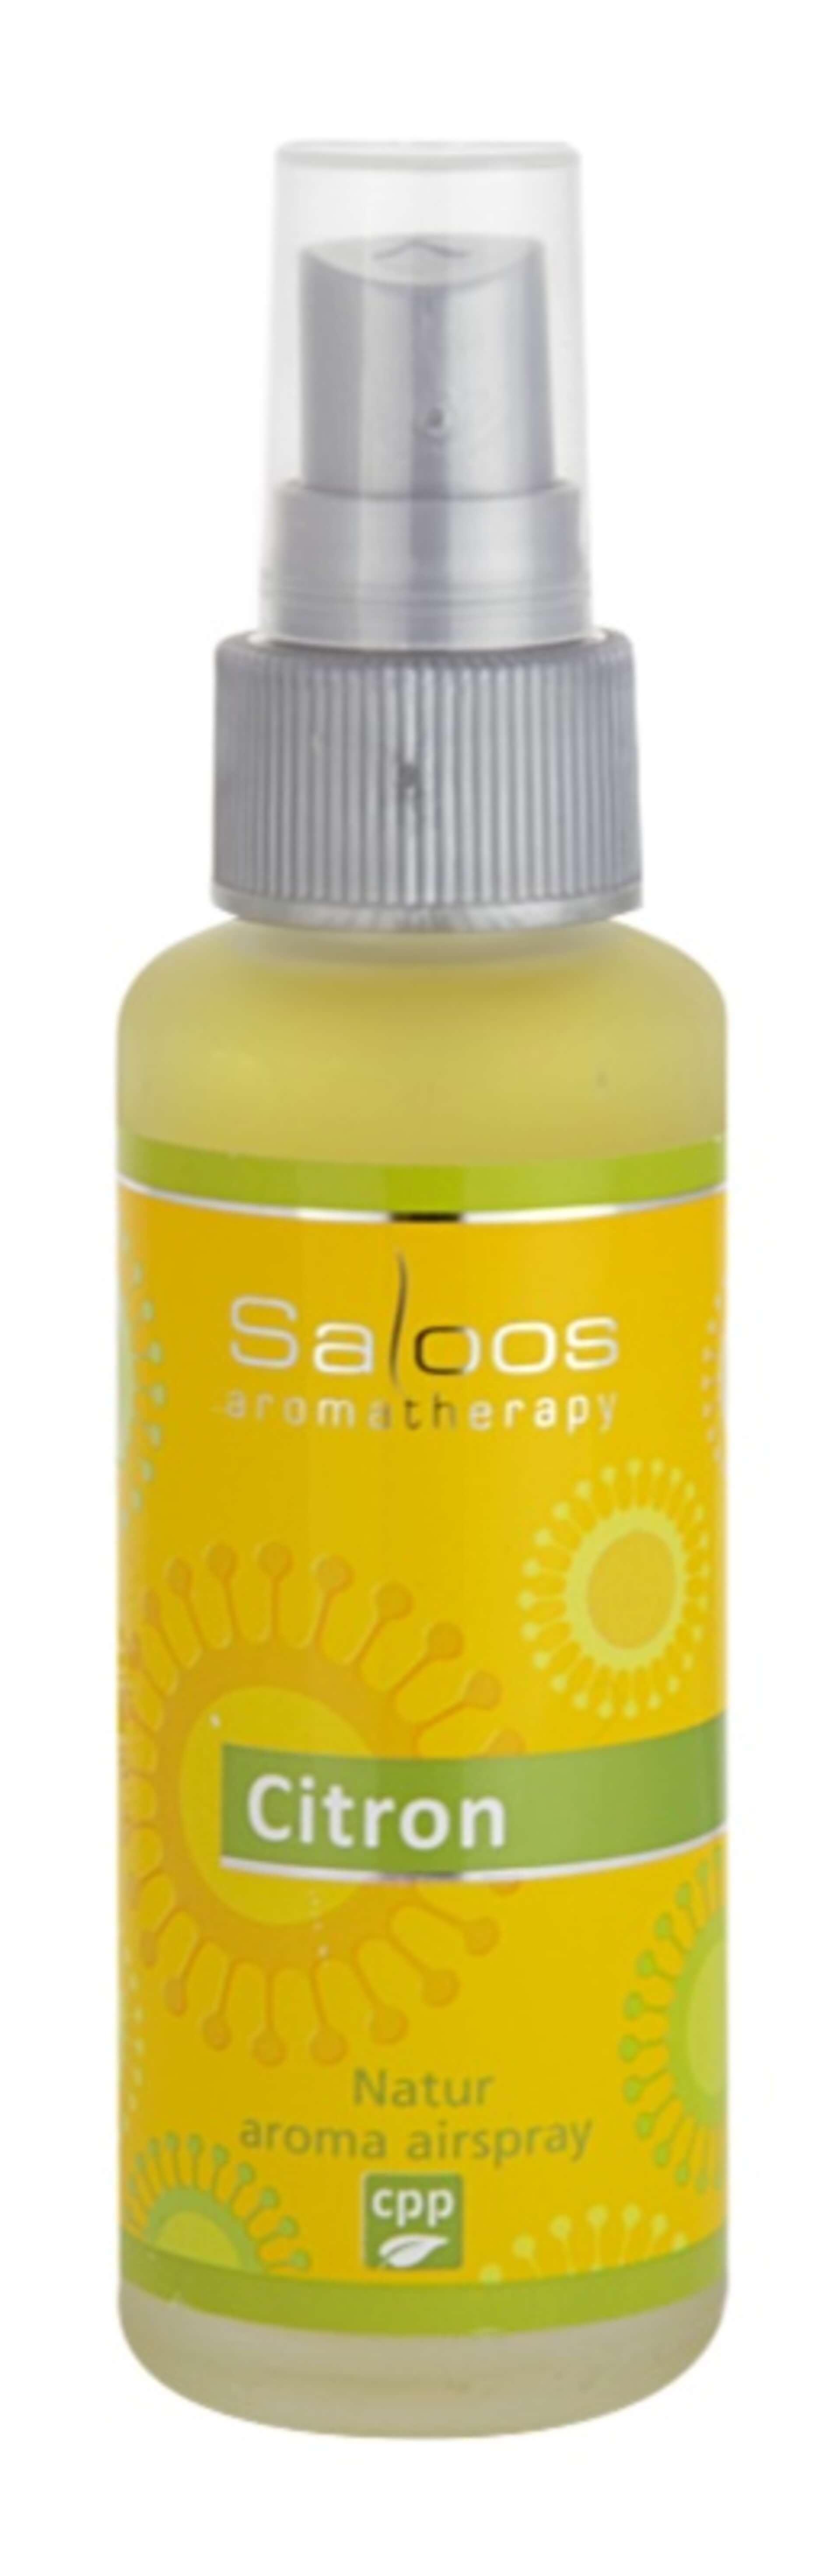 E-shop Saloos Natur aróma Airspray Citron 50 ml